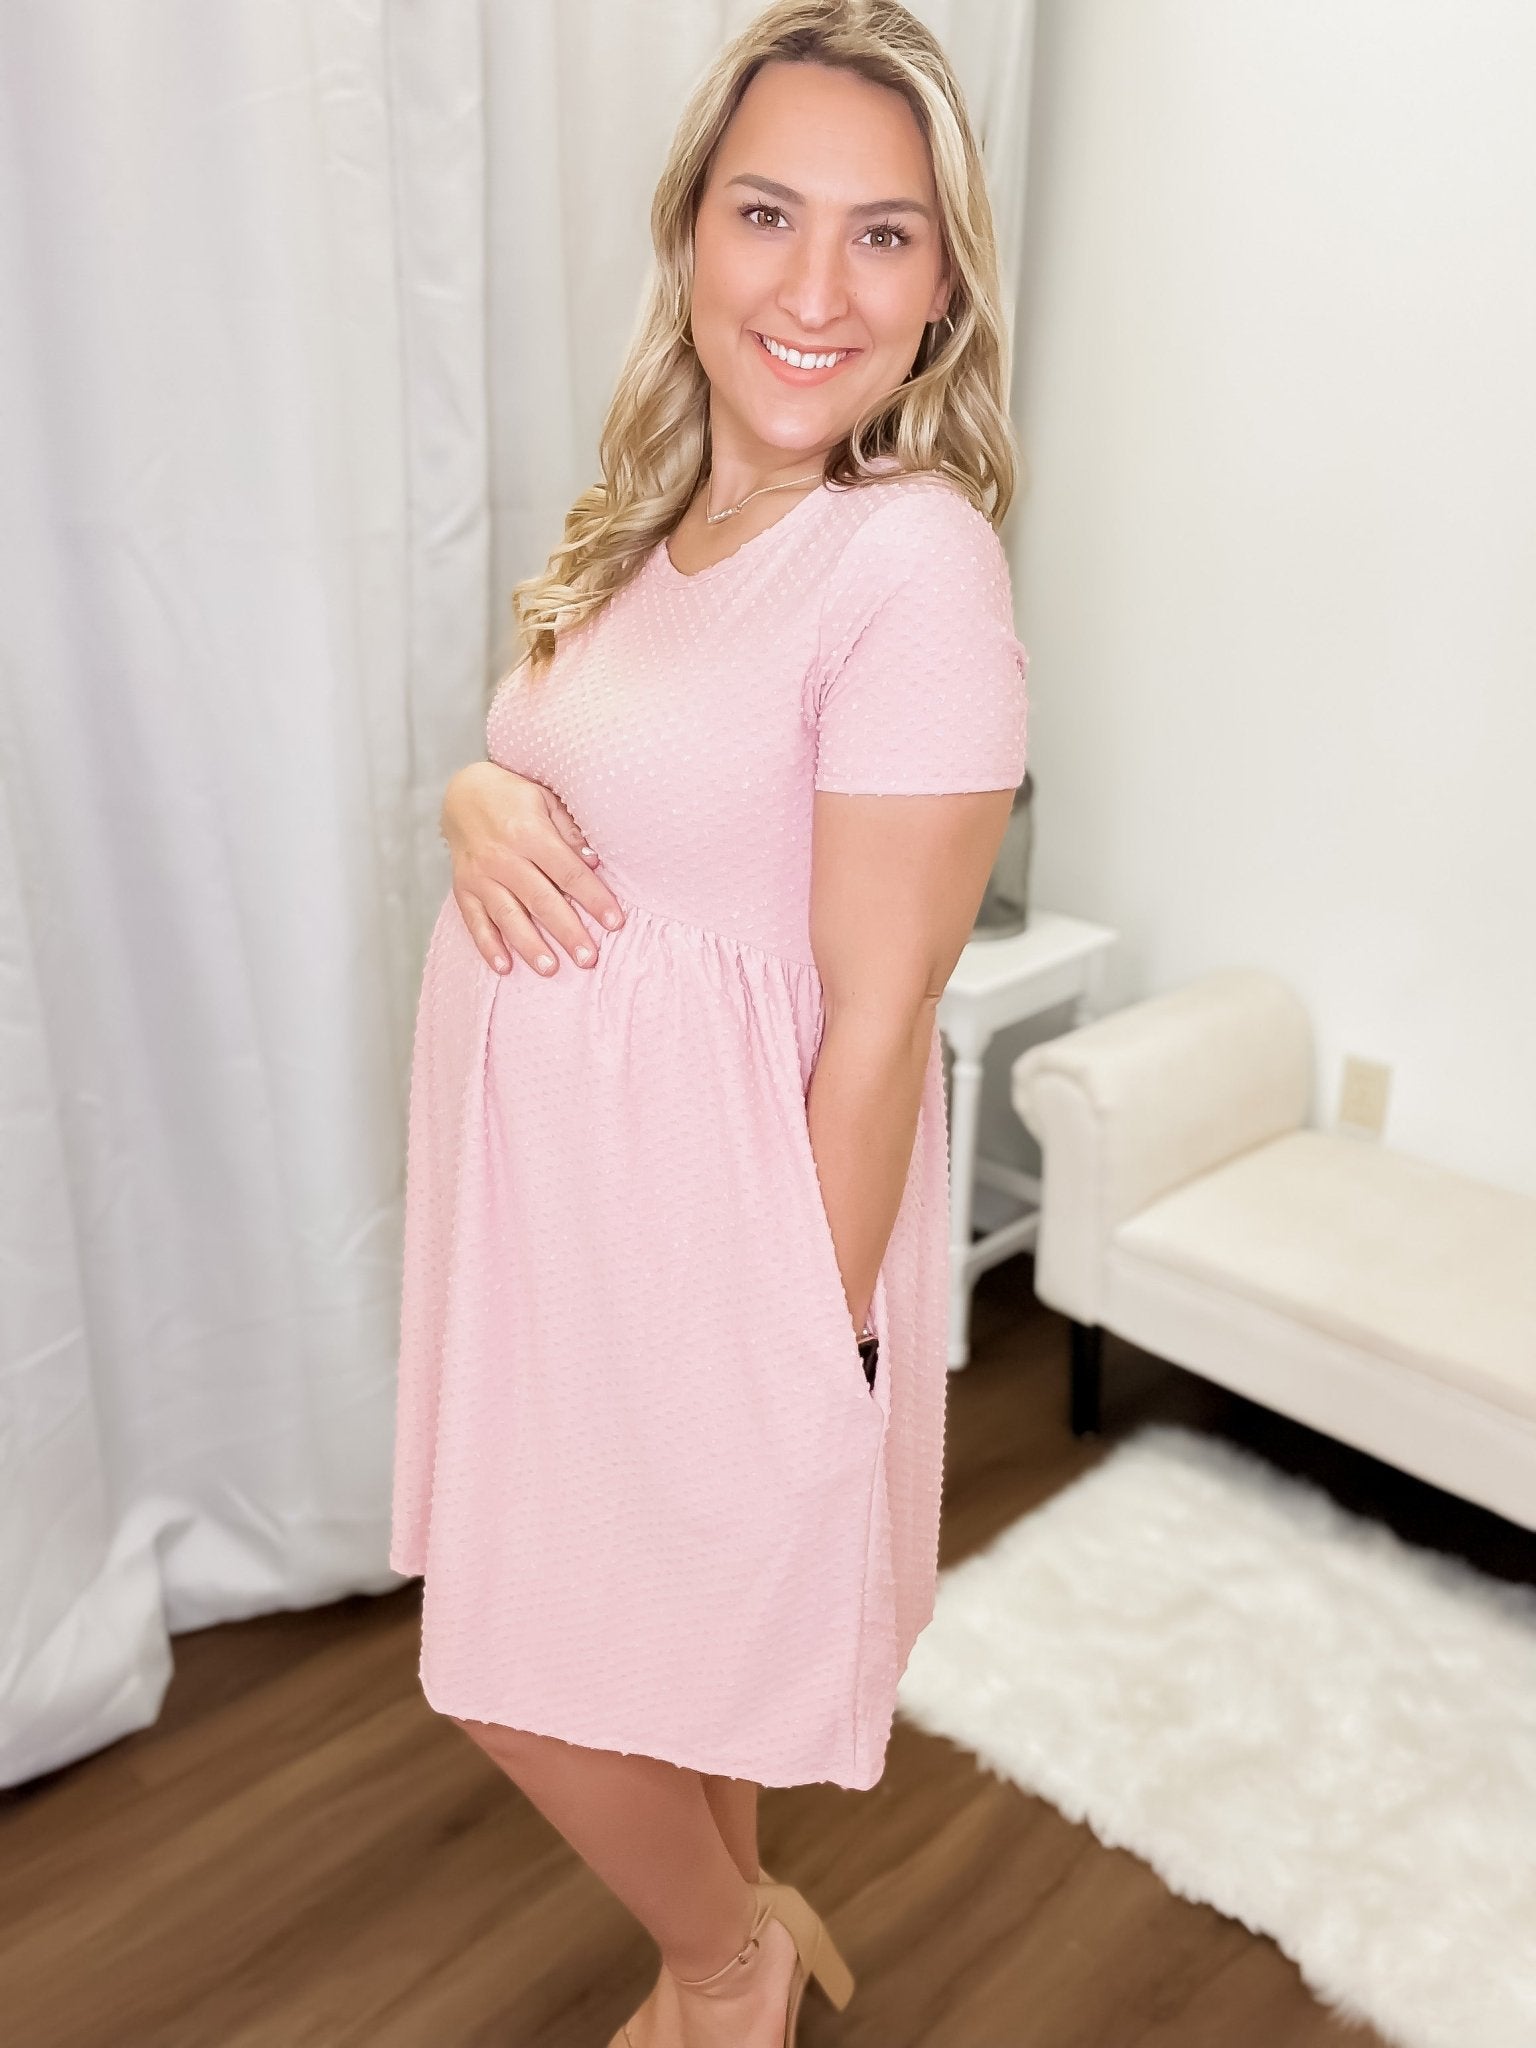 Powder Pink Dotted Dress - The Bump & Company LLC